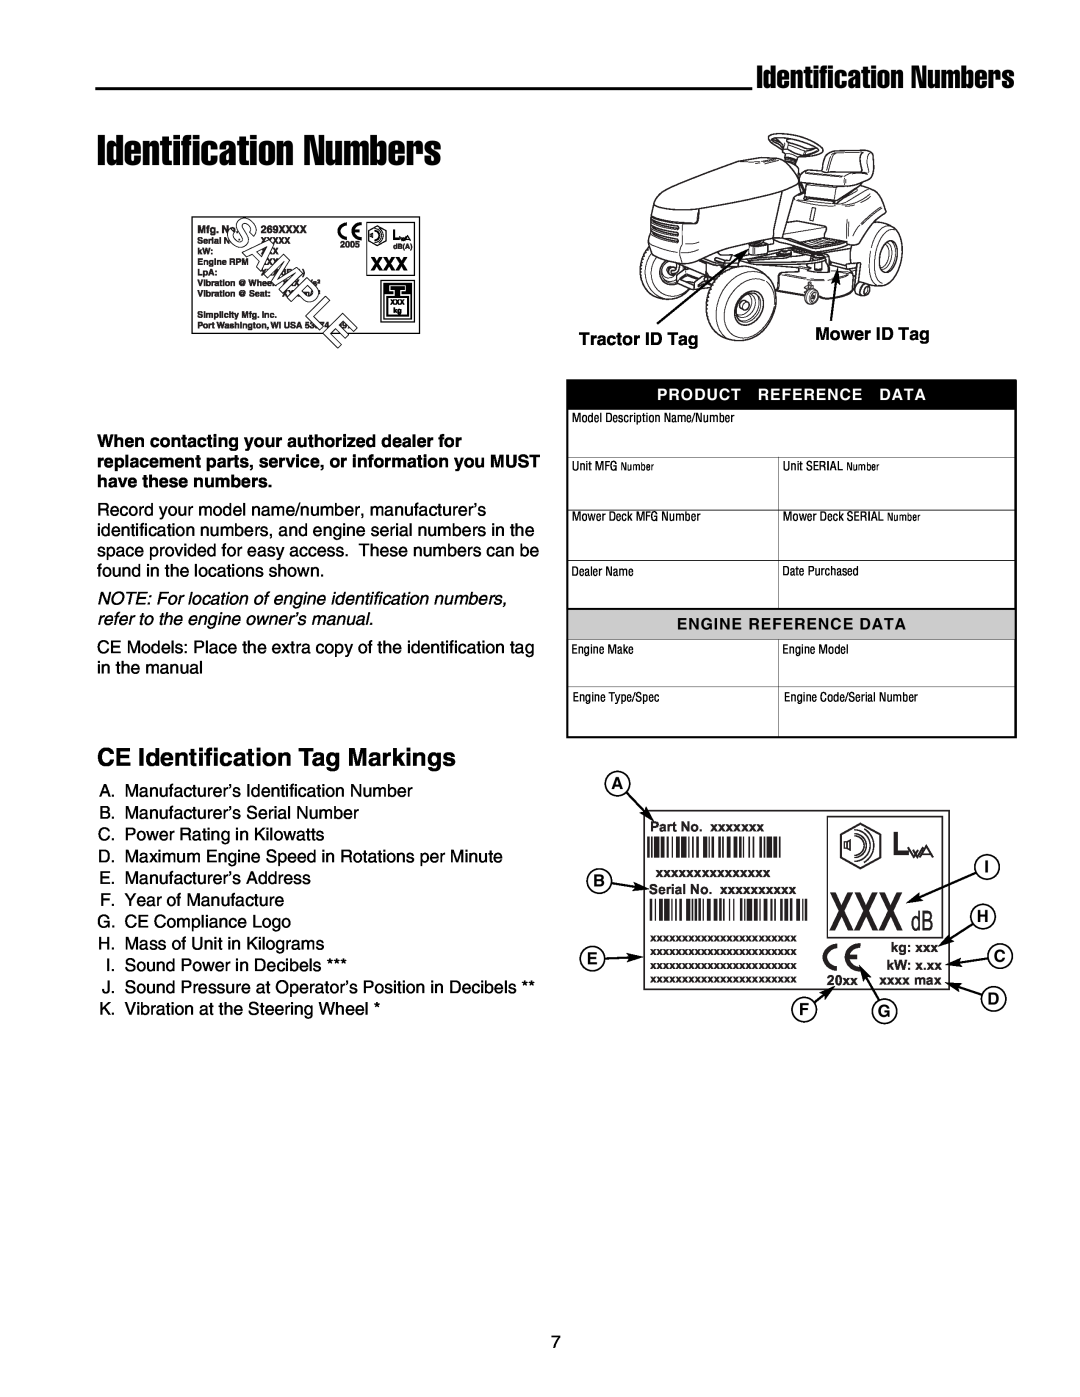 Snapper LT-200 Series manual Identification Numbers, CE Identification Tag Markings, xxxdB 